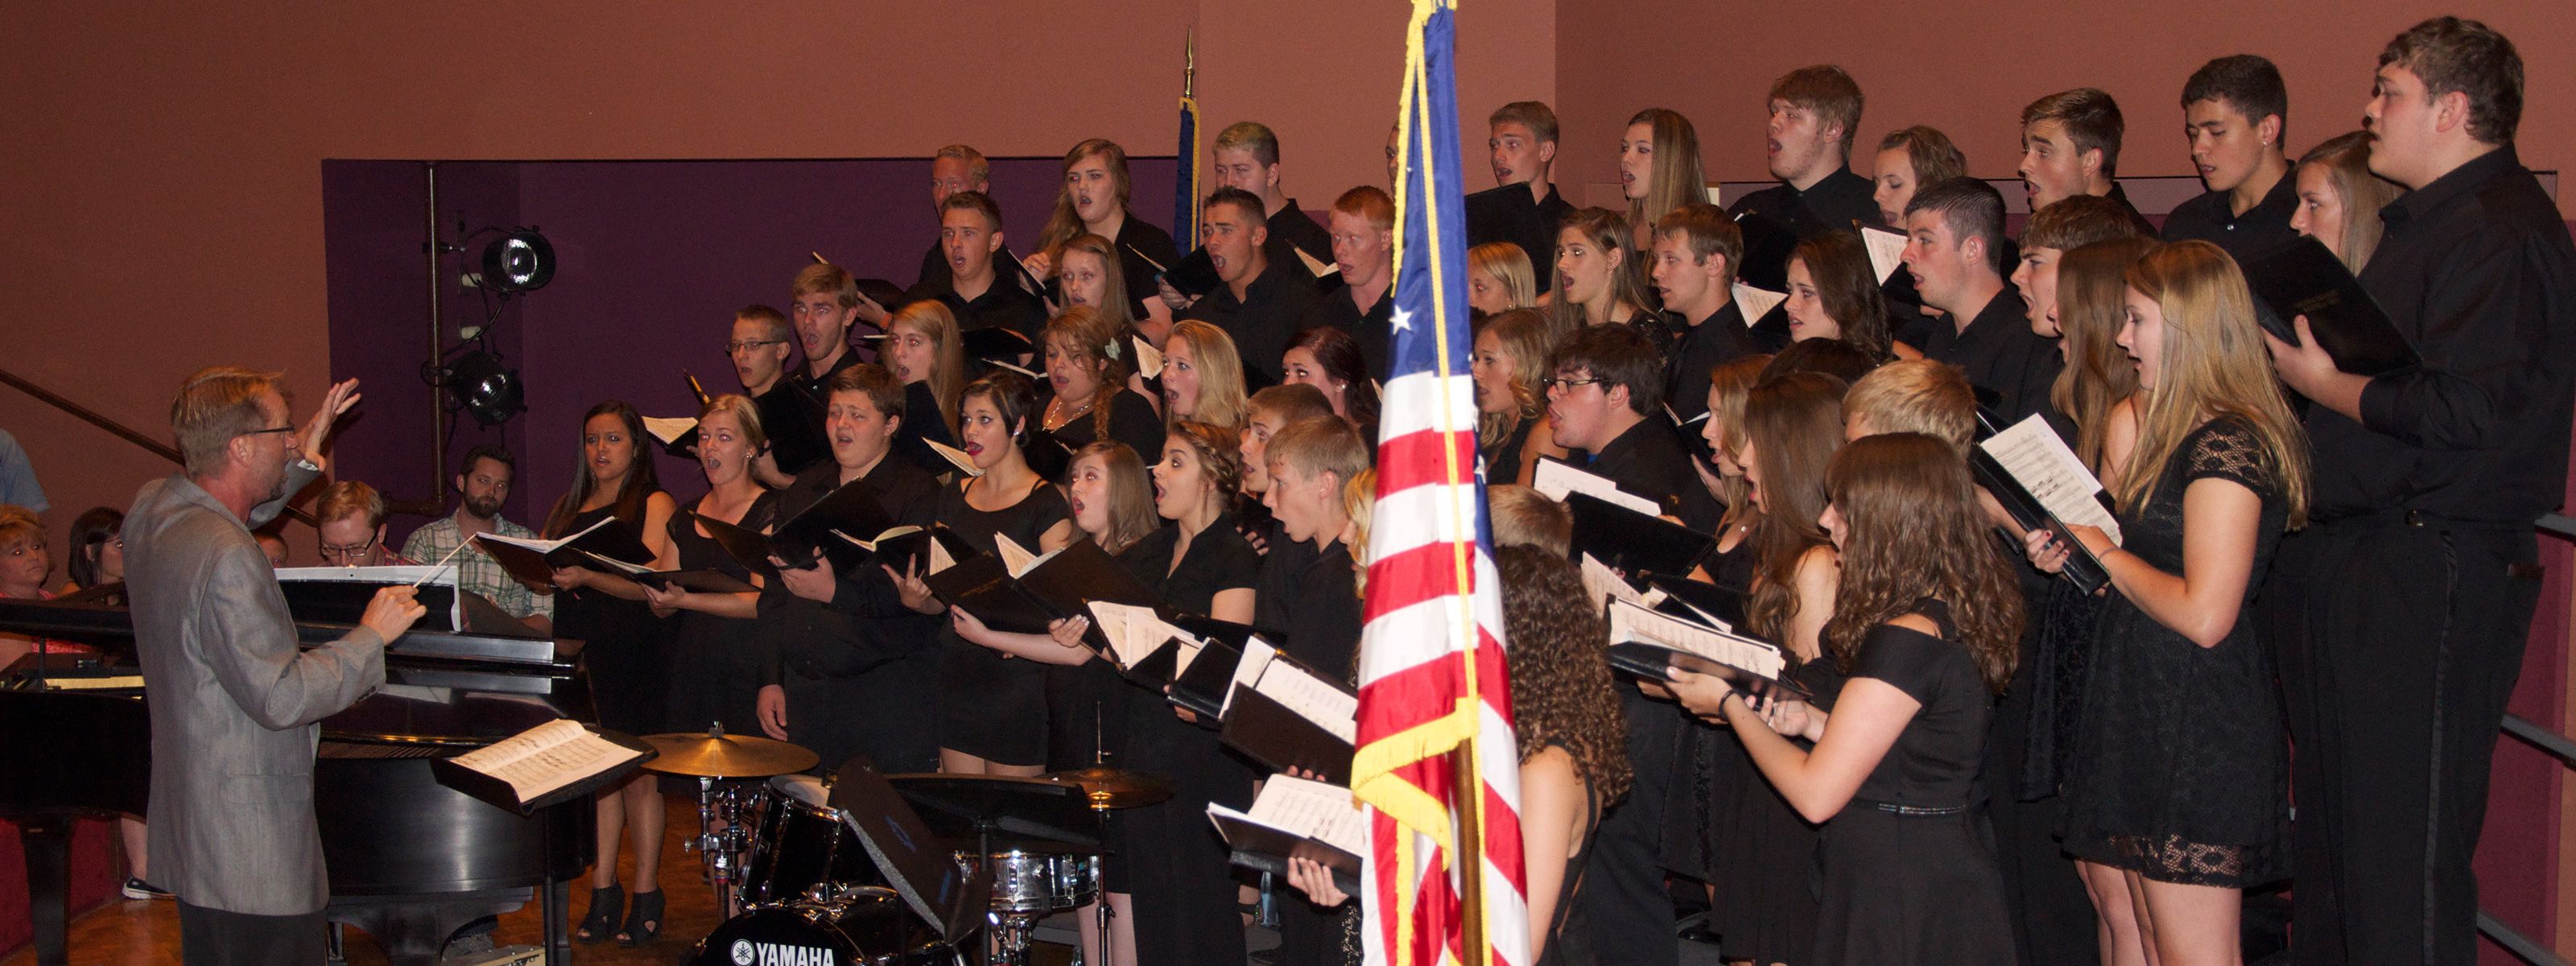 Choir performing in Seward, Nebraska on July 4th